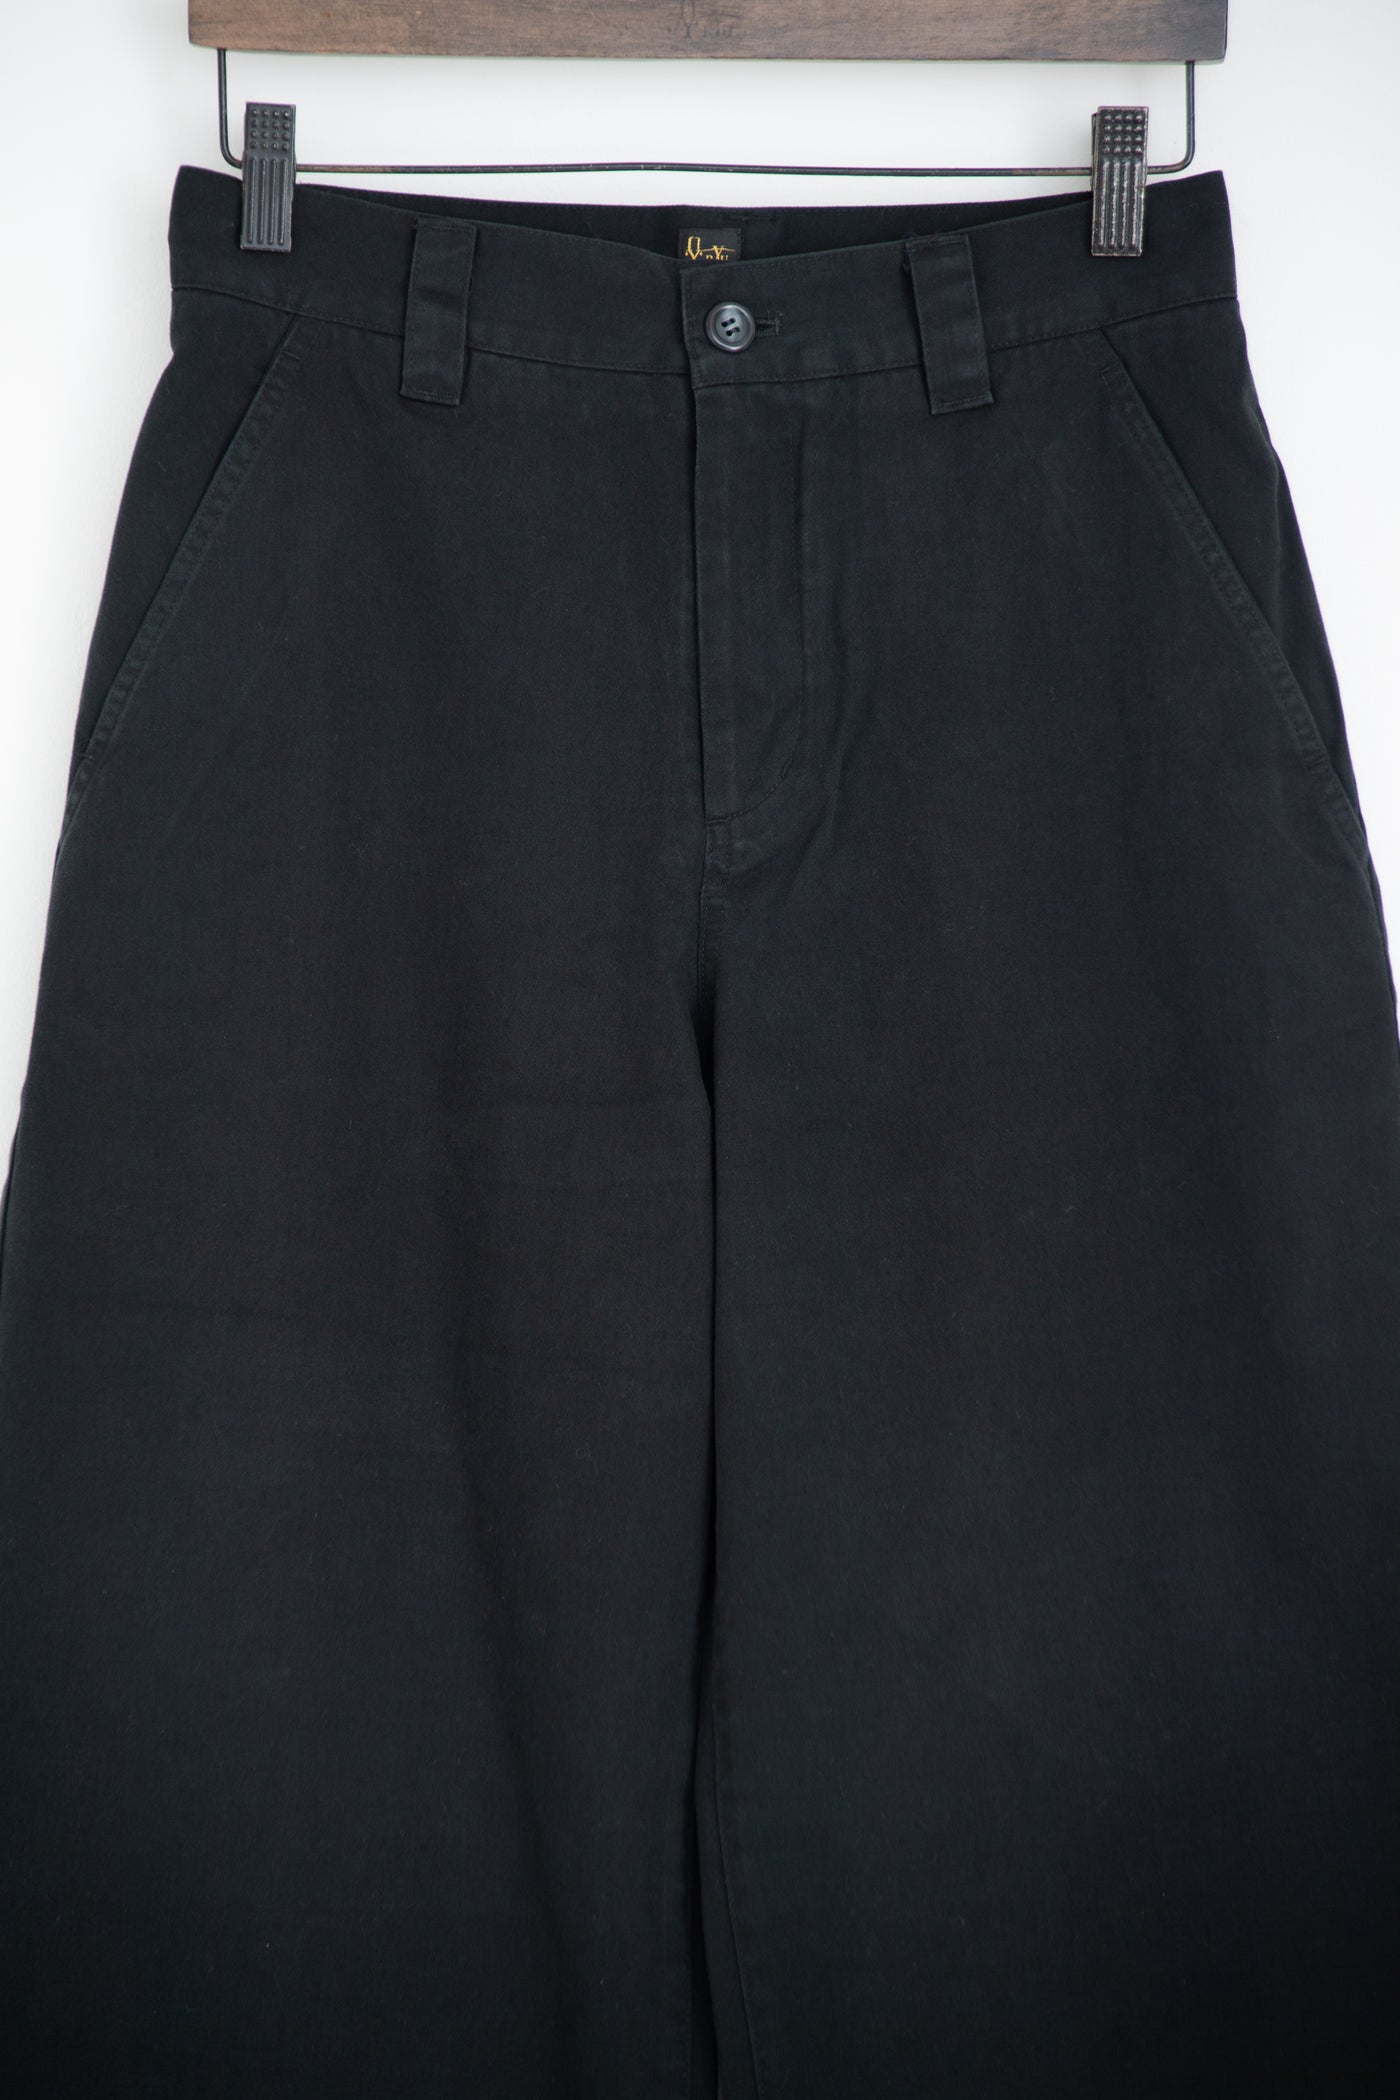 vintage satin wide full-length pants